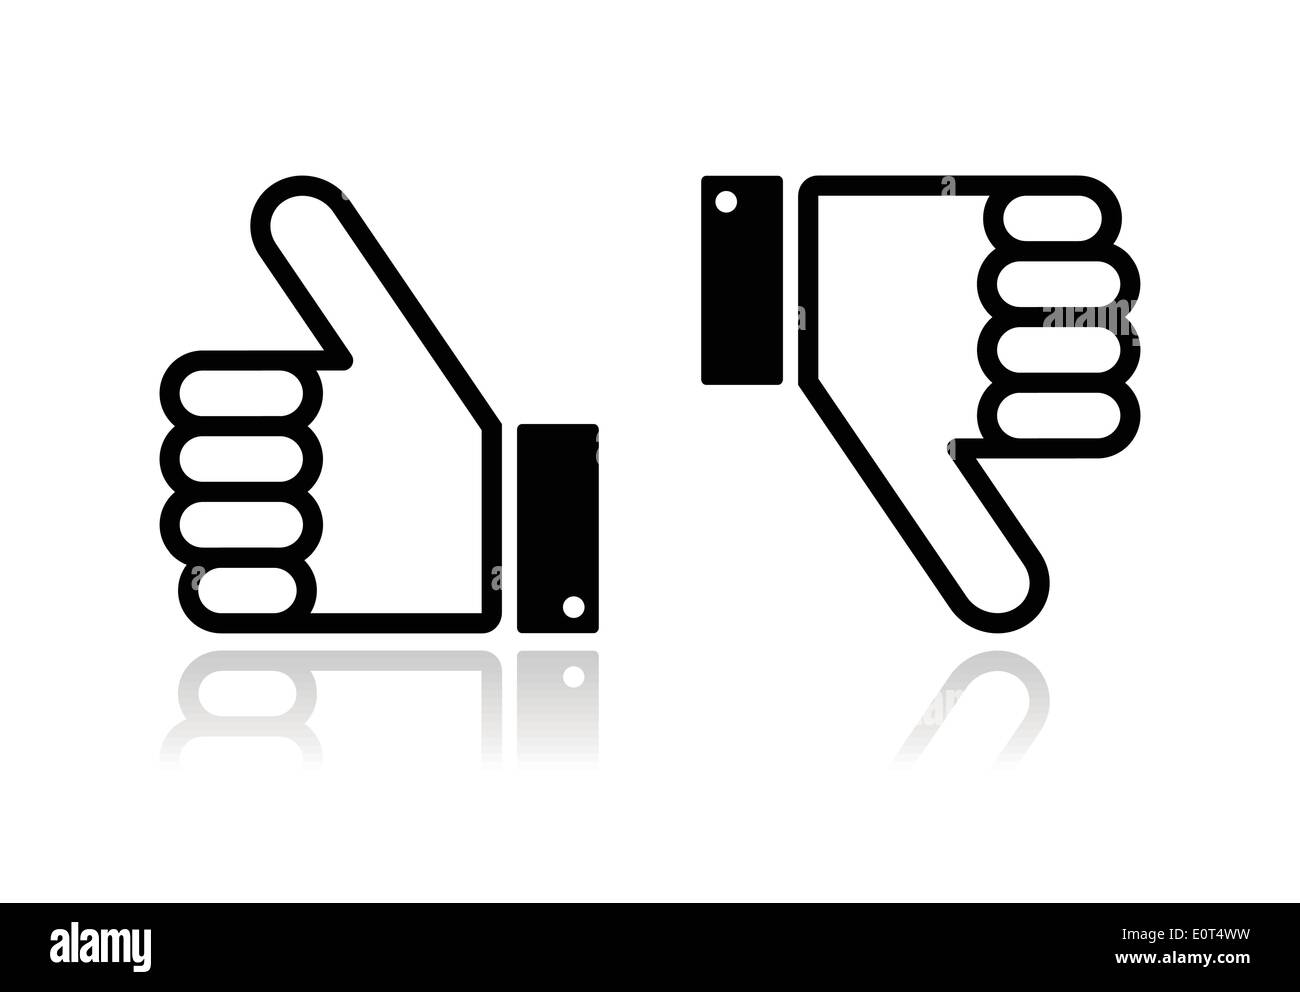 Thumb up and down black icon - social media Stock Vector